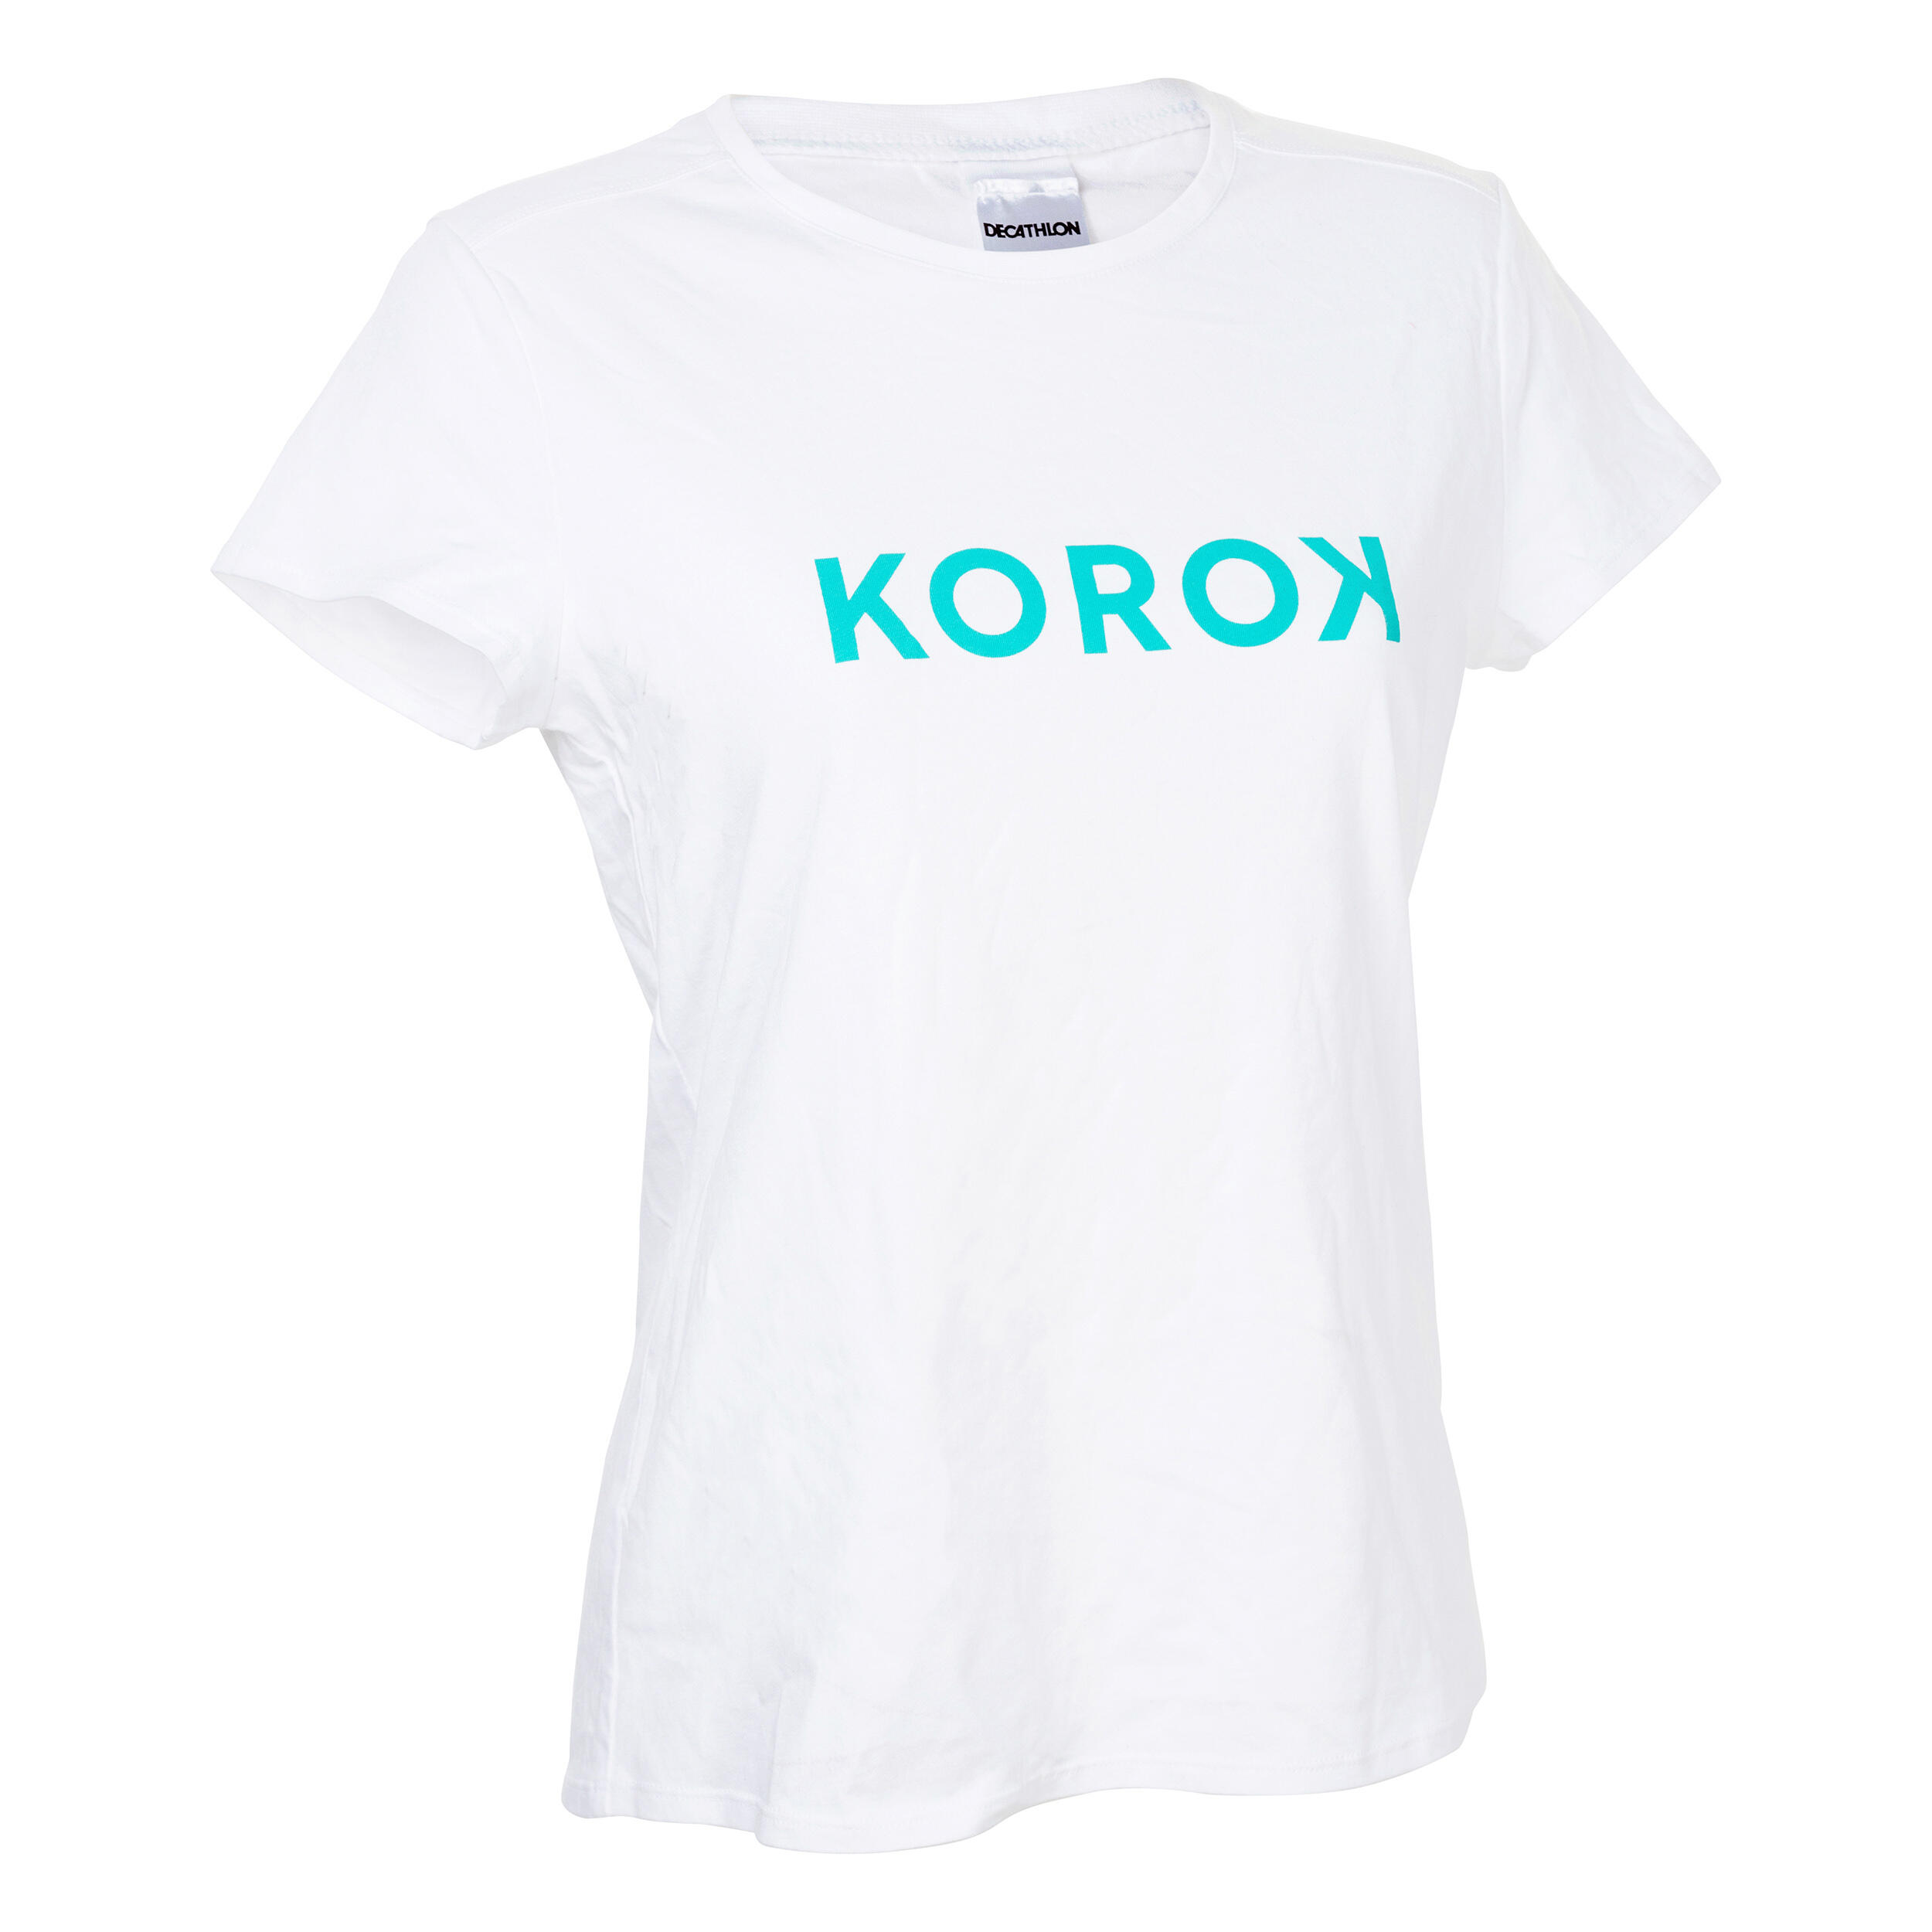 KOROK Women's Field Hockey T-Shirt FH110 - White/Turquoise